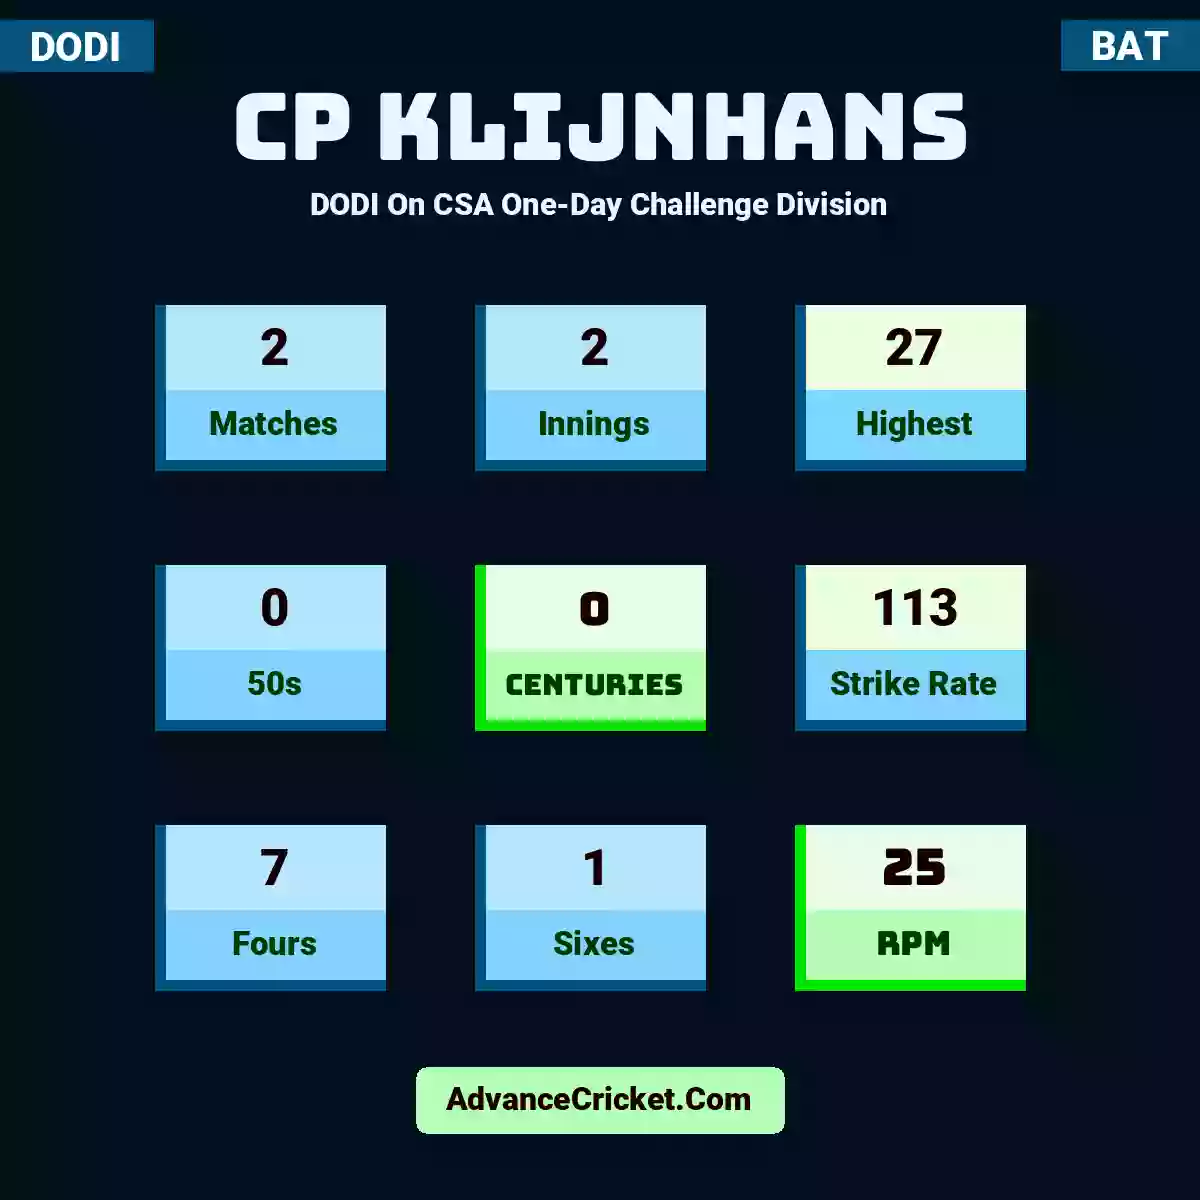 CP Klijnhans DODI  On CSA One-Day Challenge Division, CP Klijnhans played 2 matches, scored 27 runs as highest, 0 half-centuries, and 0 centuries, with a strike rate of 113. C.Klijnhans hit 7 fours and 1 sixes, with an RPM of 25.